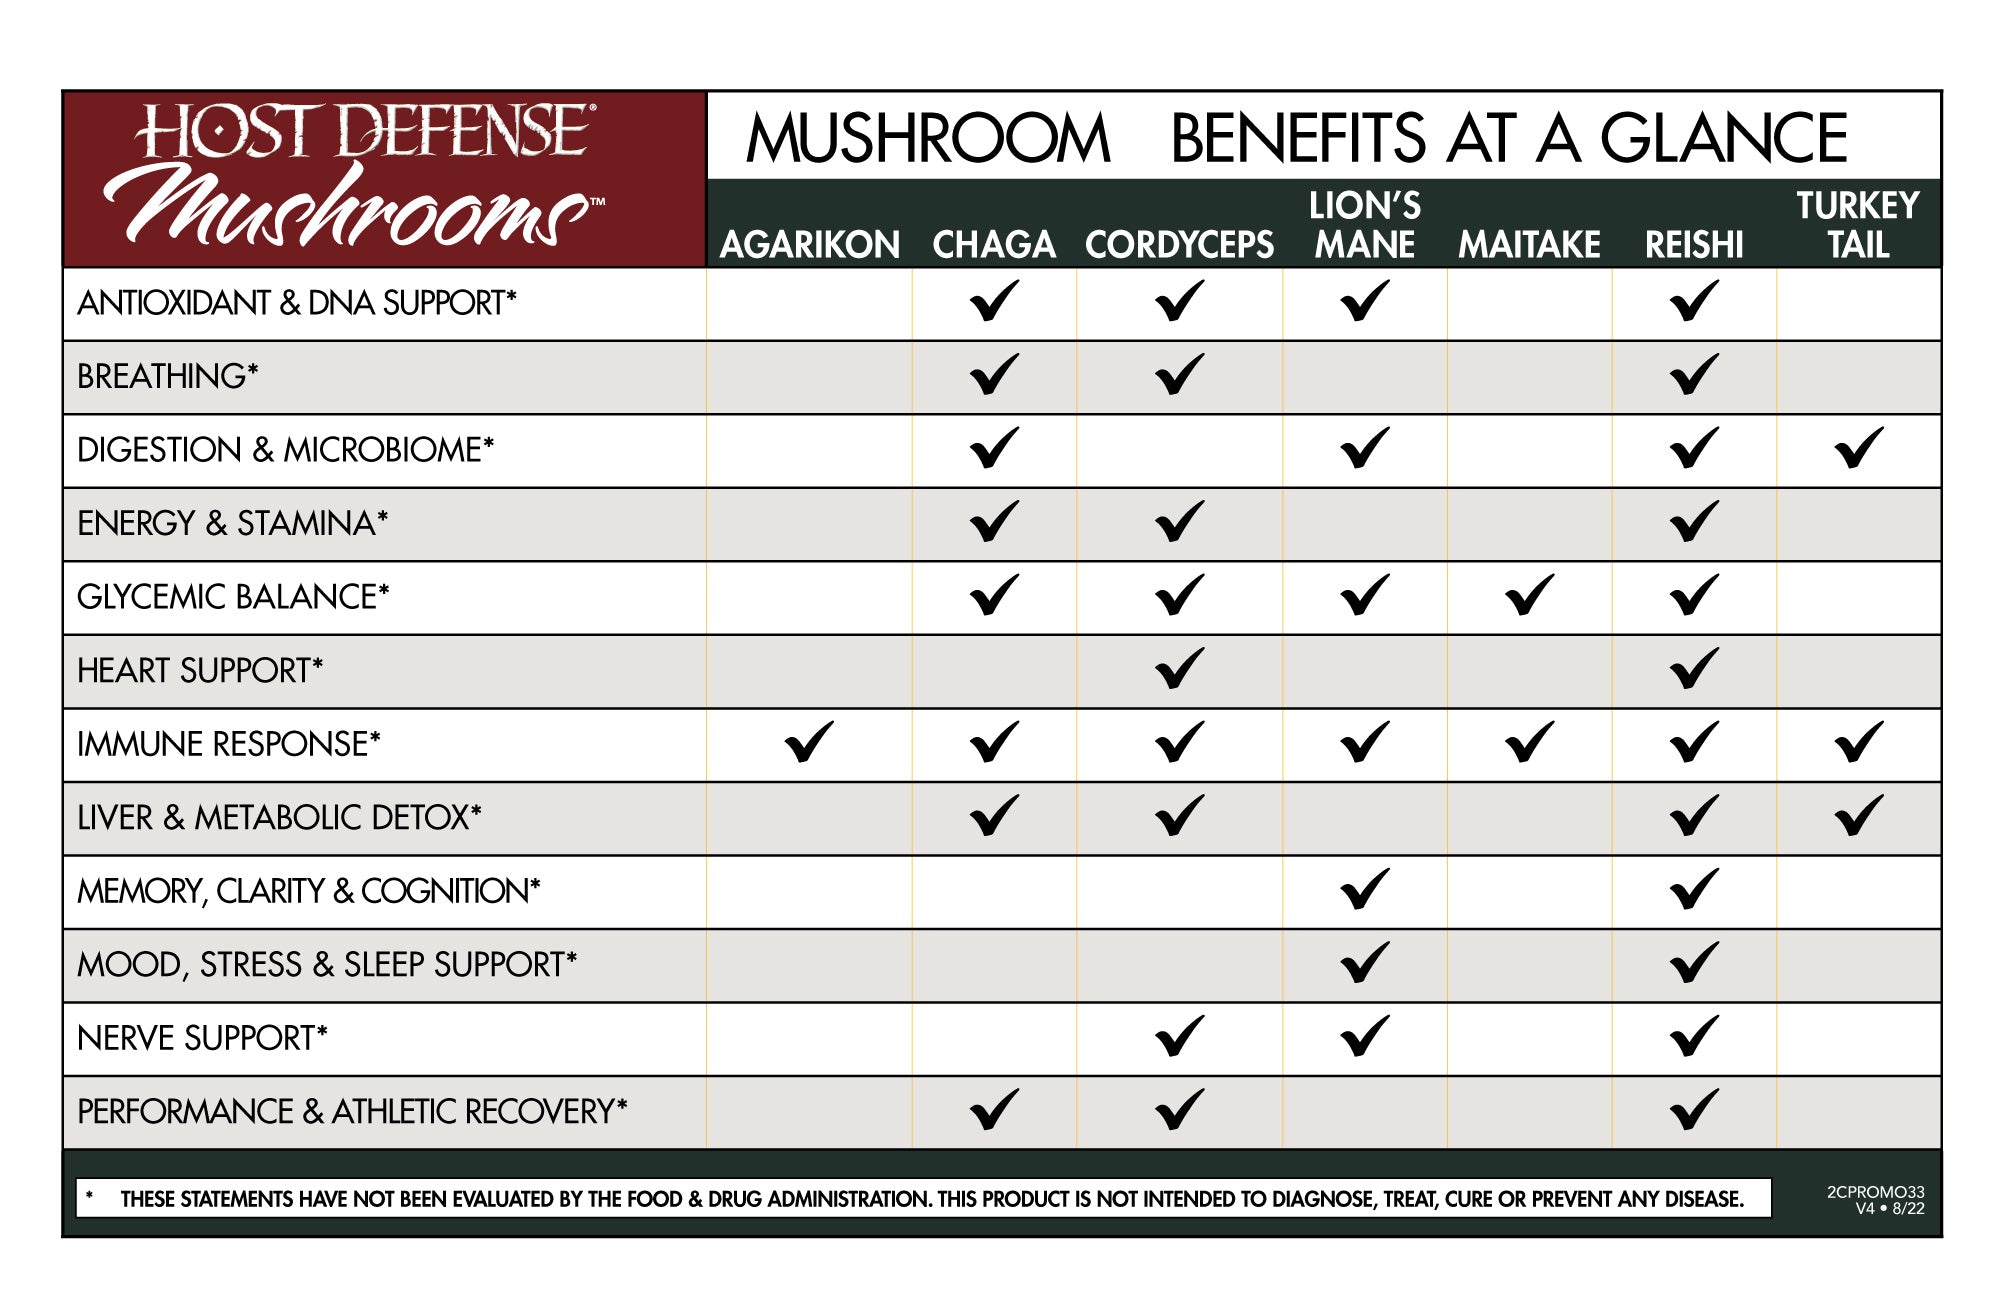 Mushroom Benefits at a Glance